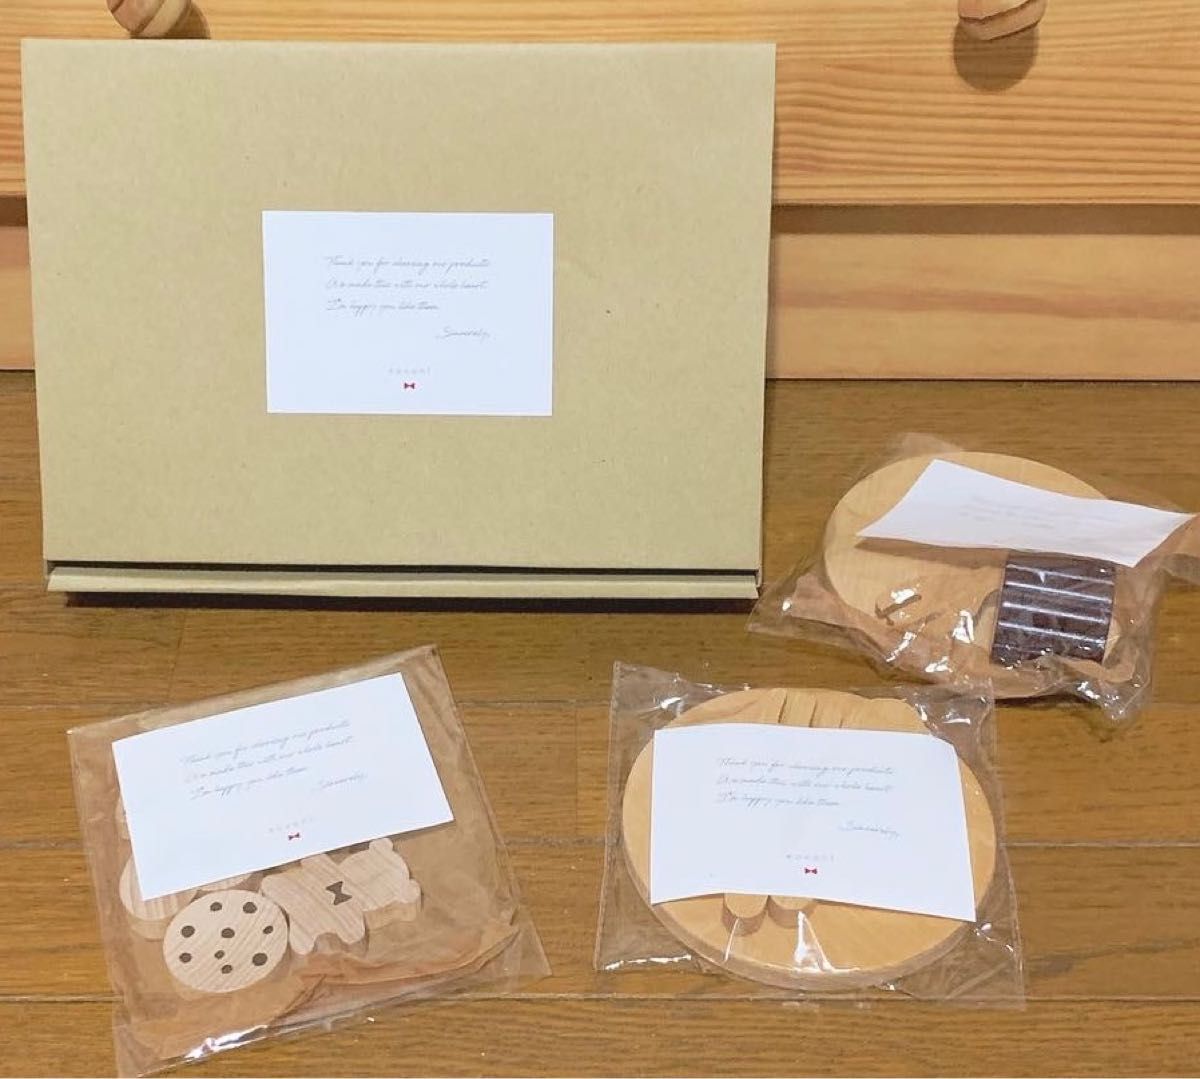 kokoni 木製 おままごと インテリア クッキー アイス カヌレ Yahoo